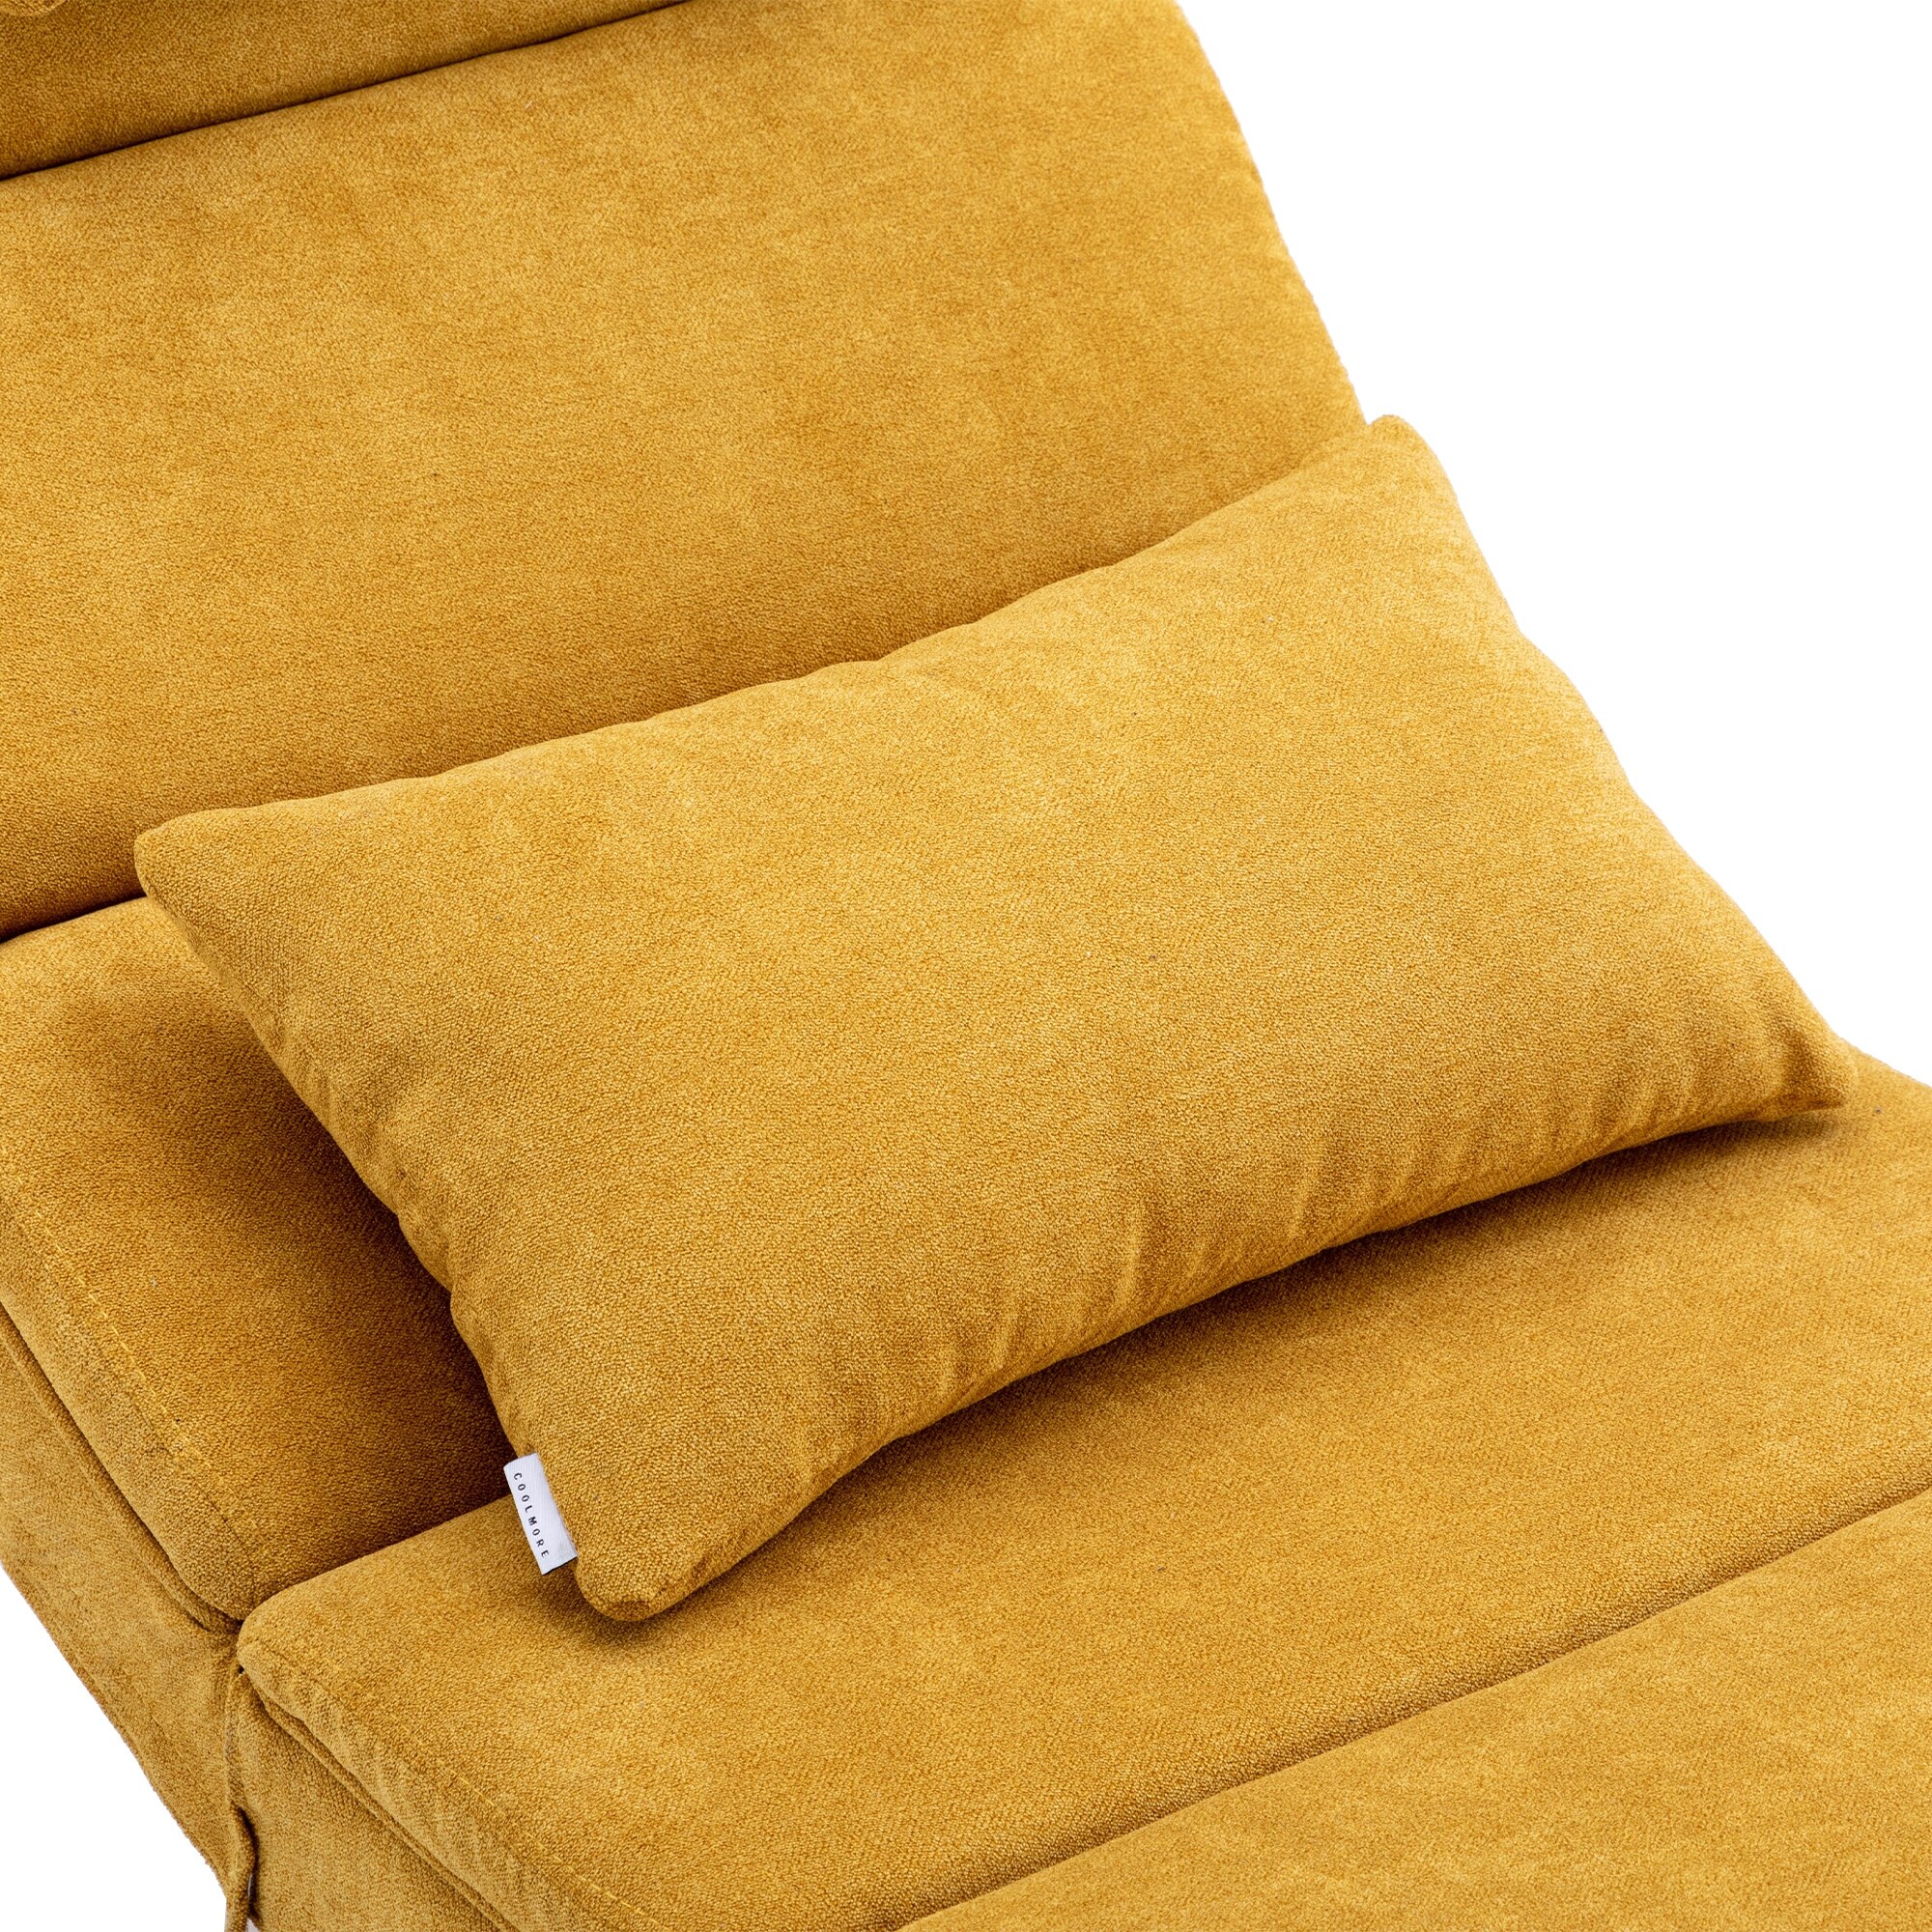 Linen Recliner Seat Cushion Cushion Integrated Rocking Chair